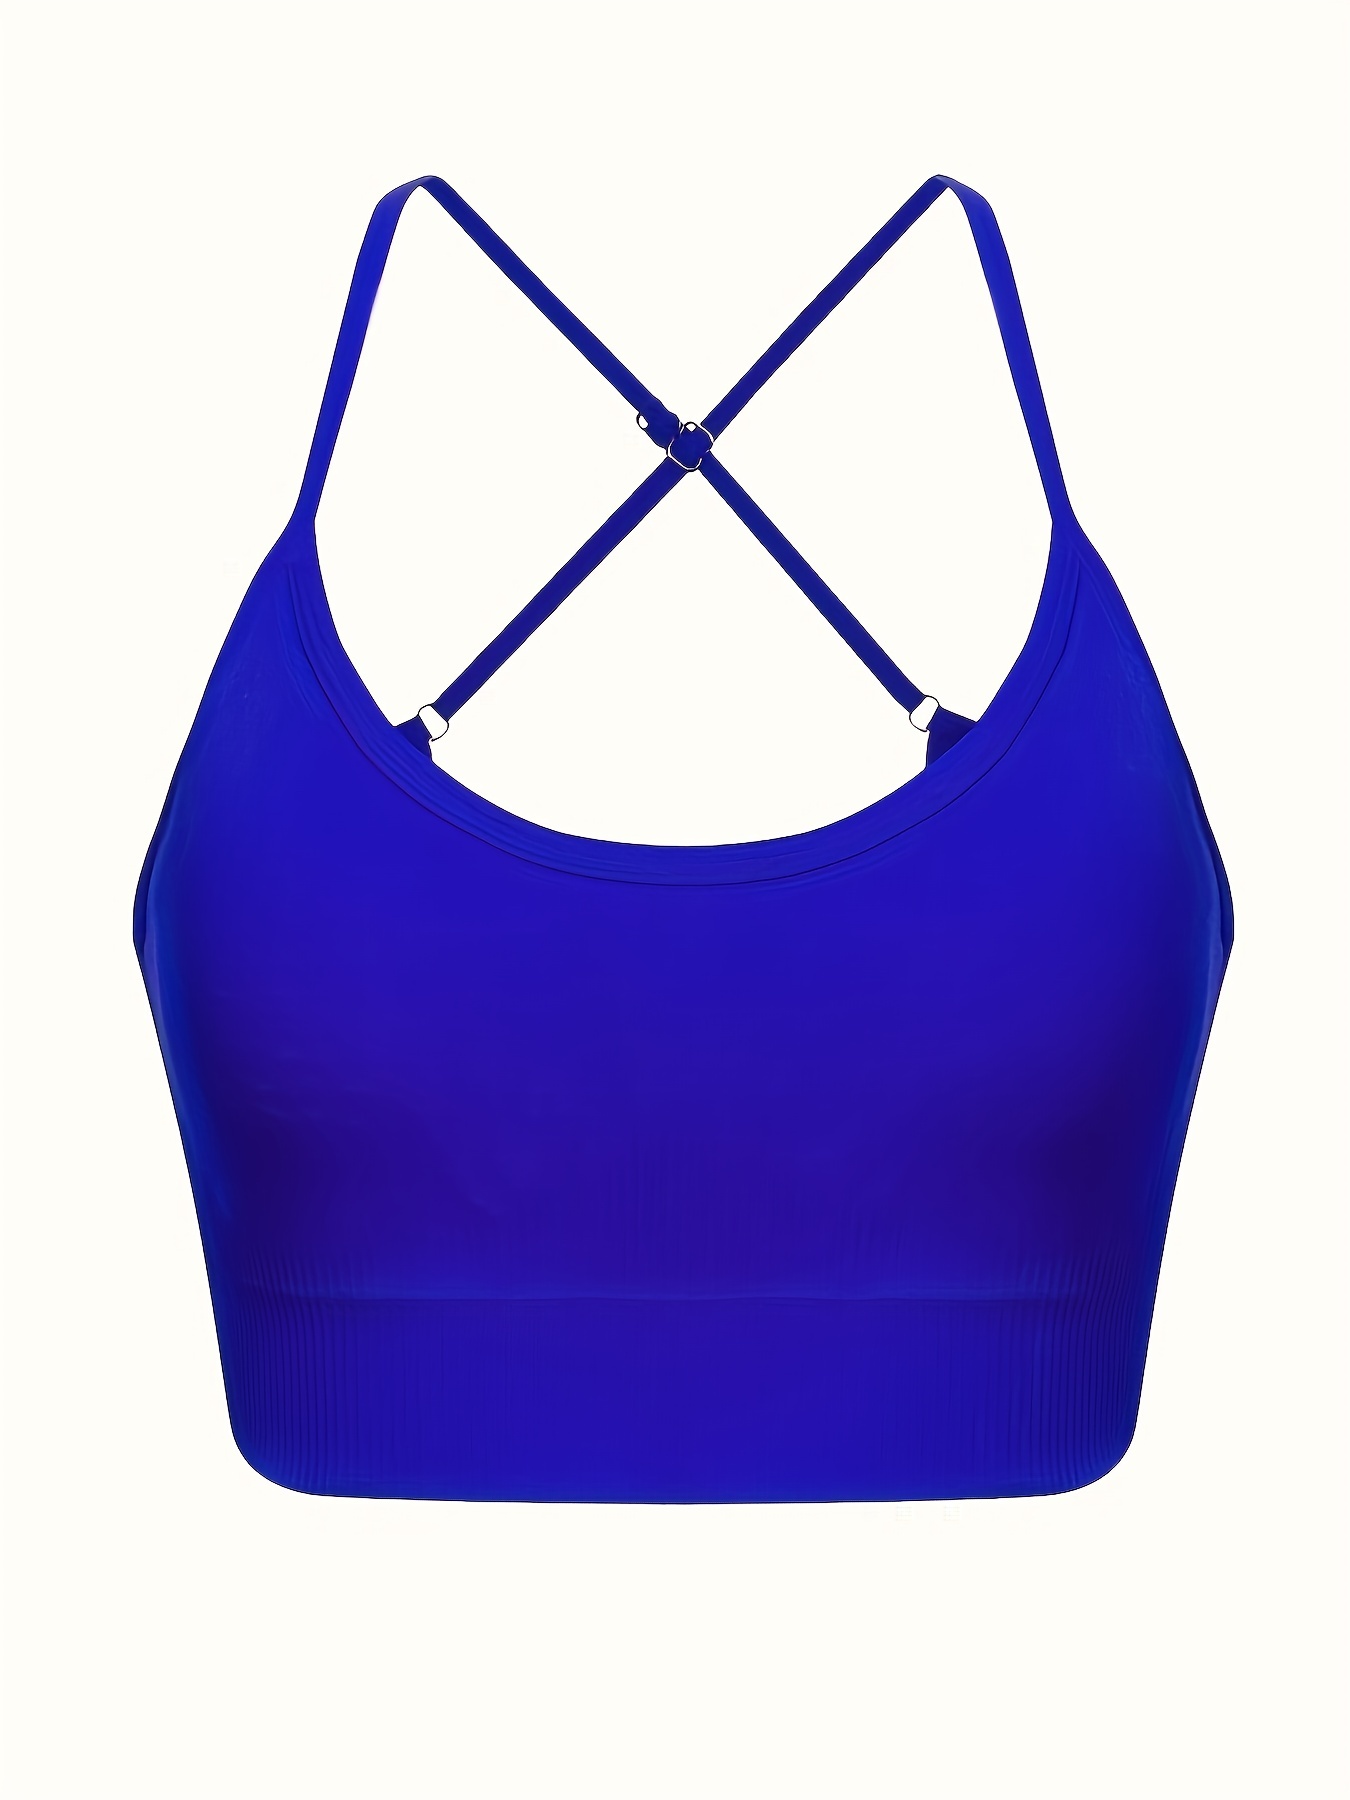 VamJump Women Sexy Criss Cross Strappy Caged Bralette Padded Sports Bra XL  Blue in Bahrain